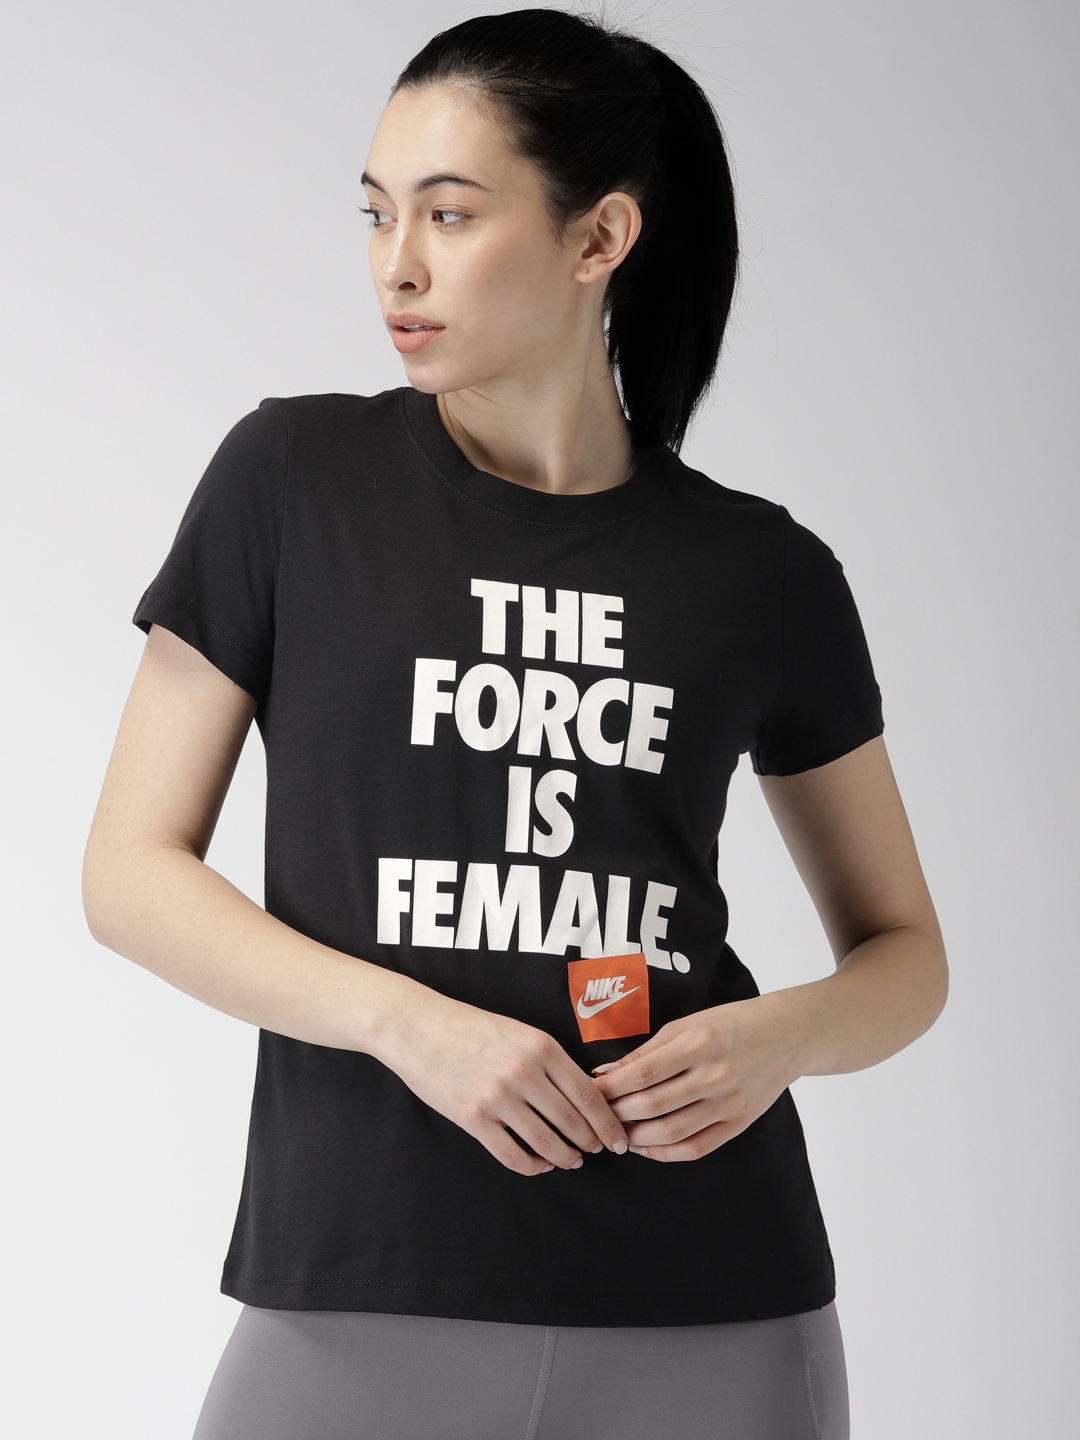 ريشة بيو اذهب the force is female t 